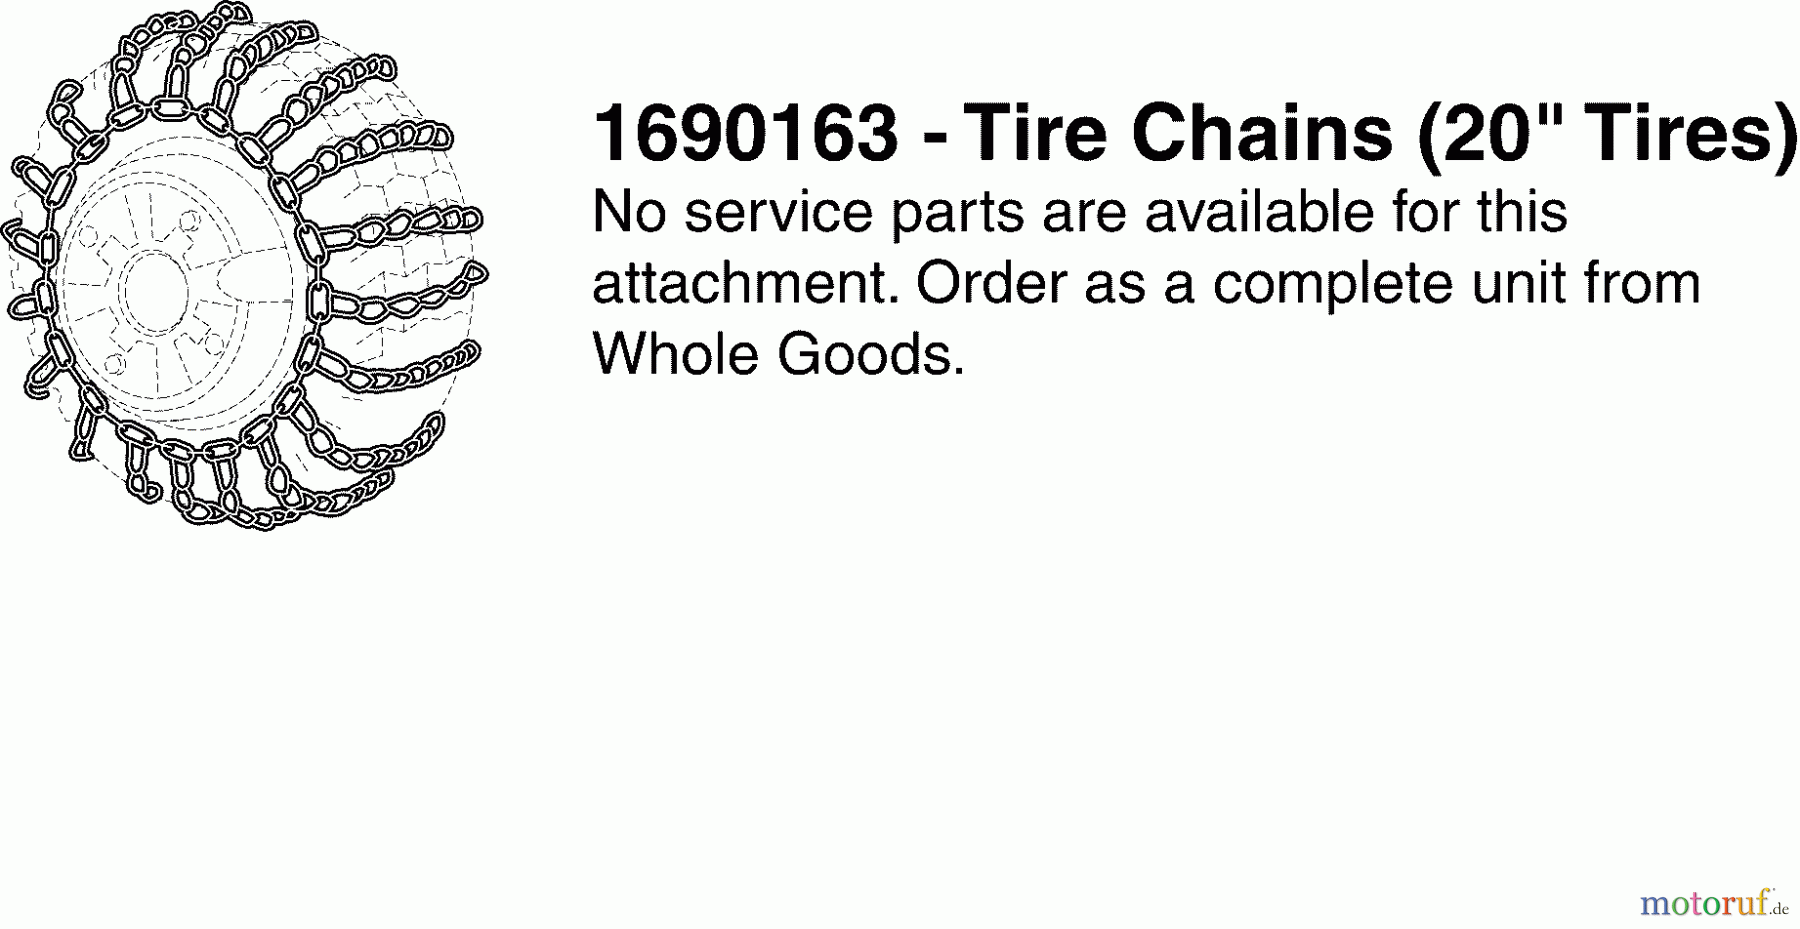  Snapper Zubehör 1690163 - Snapper Tire Chains, 20